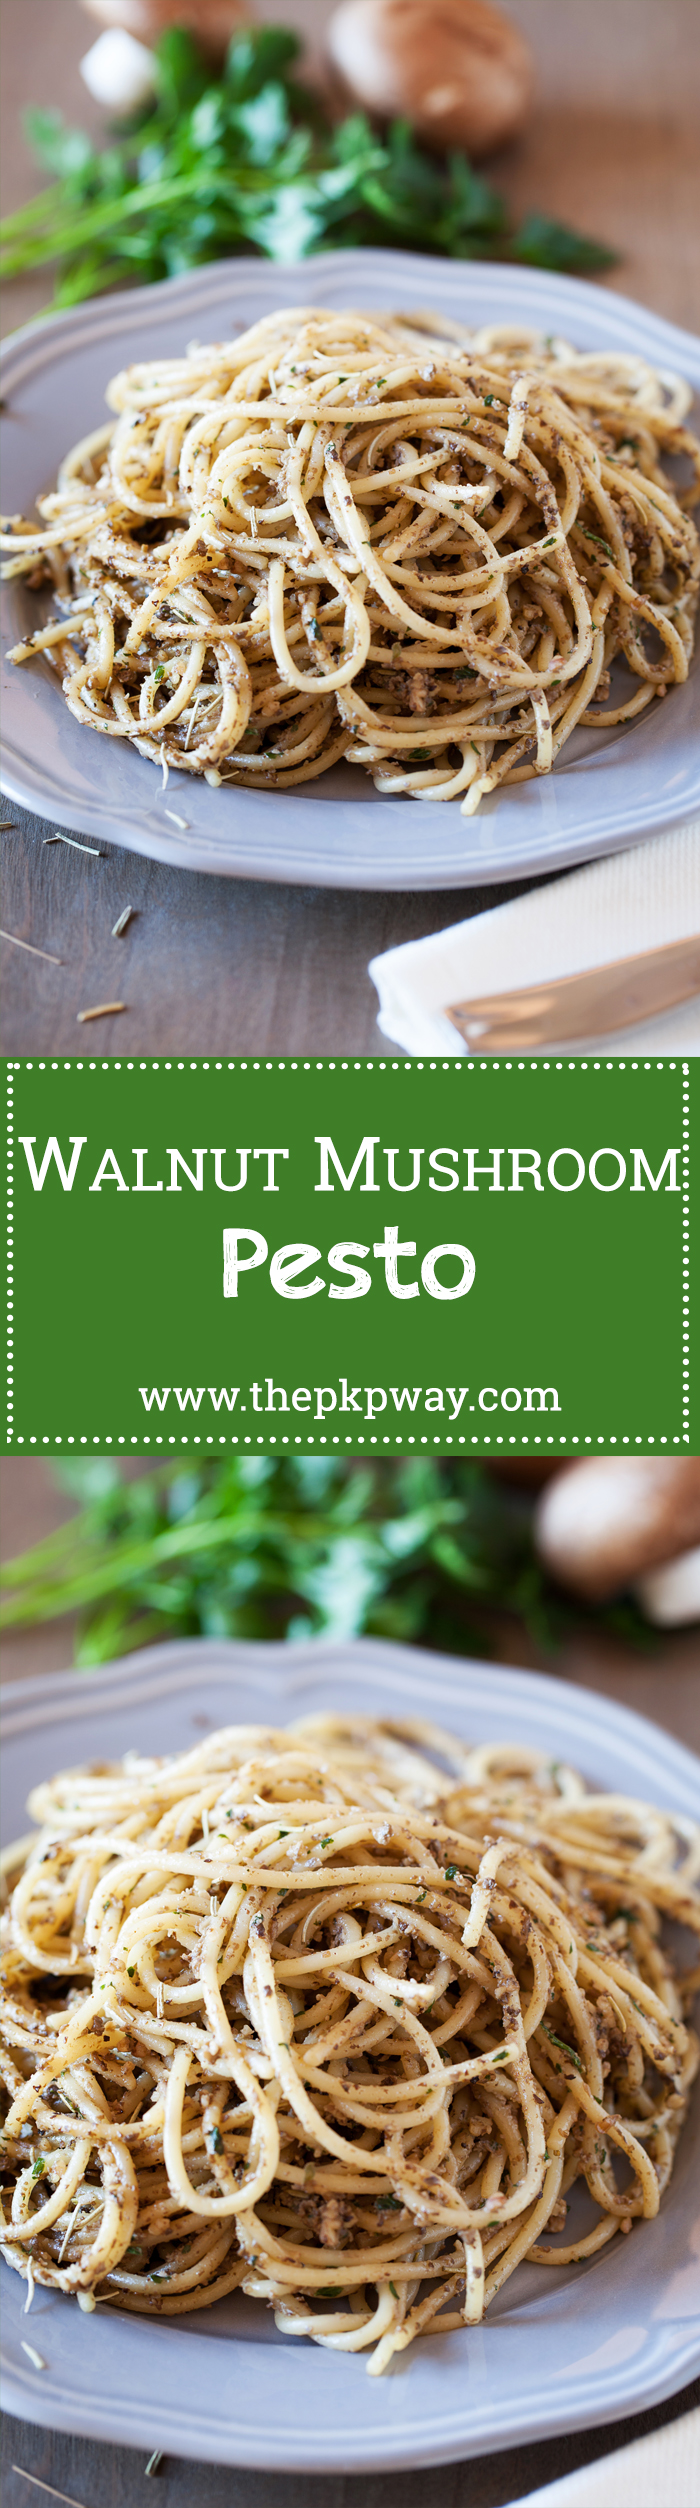 Walnut & Mushroom Pesto - Flavorful, earthy, and impressive enough to be spotted on a fancy schmancy restaurant menu.